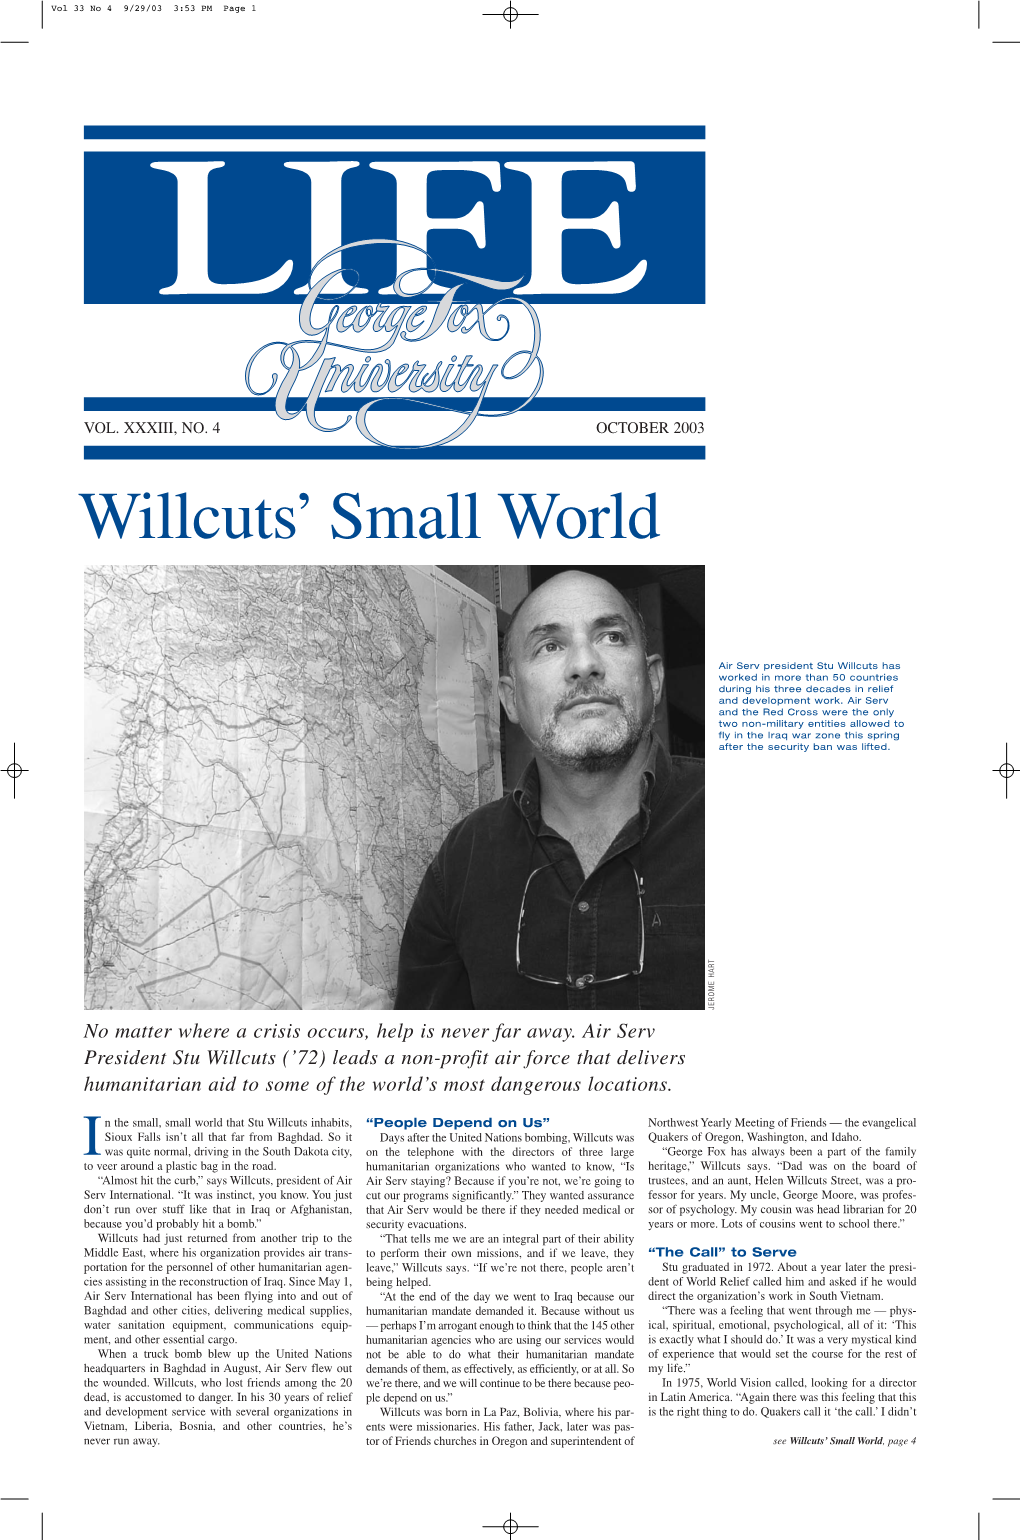 Willcuts' Small World